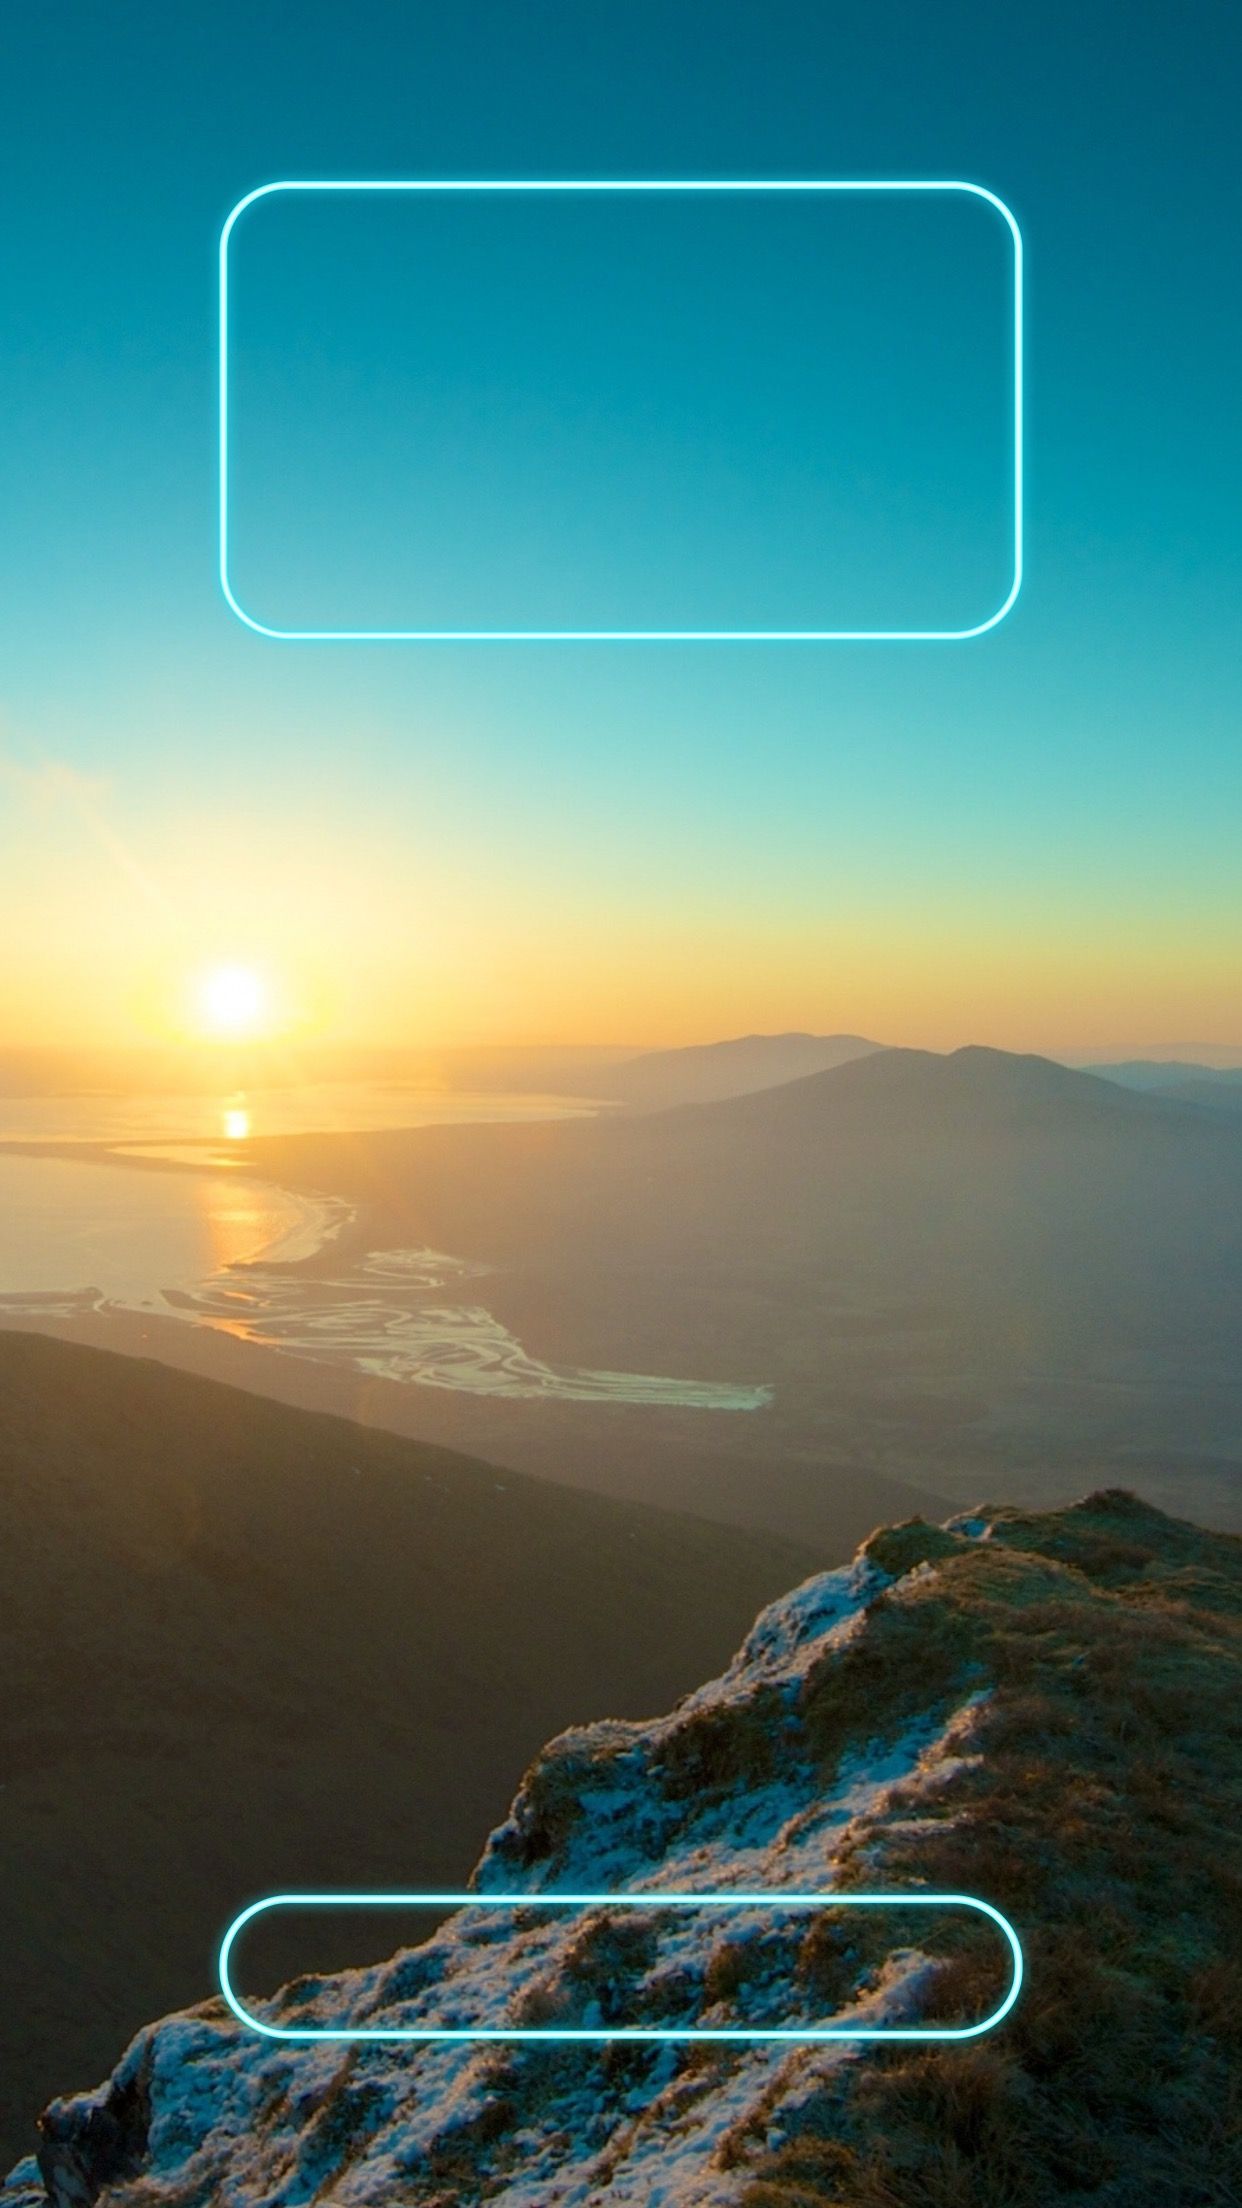 iphone 6 plus lock screen wallpaper,sky,horizon,natural landscape,atmosphere,font